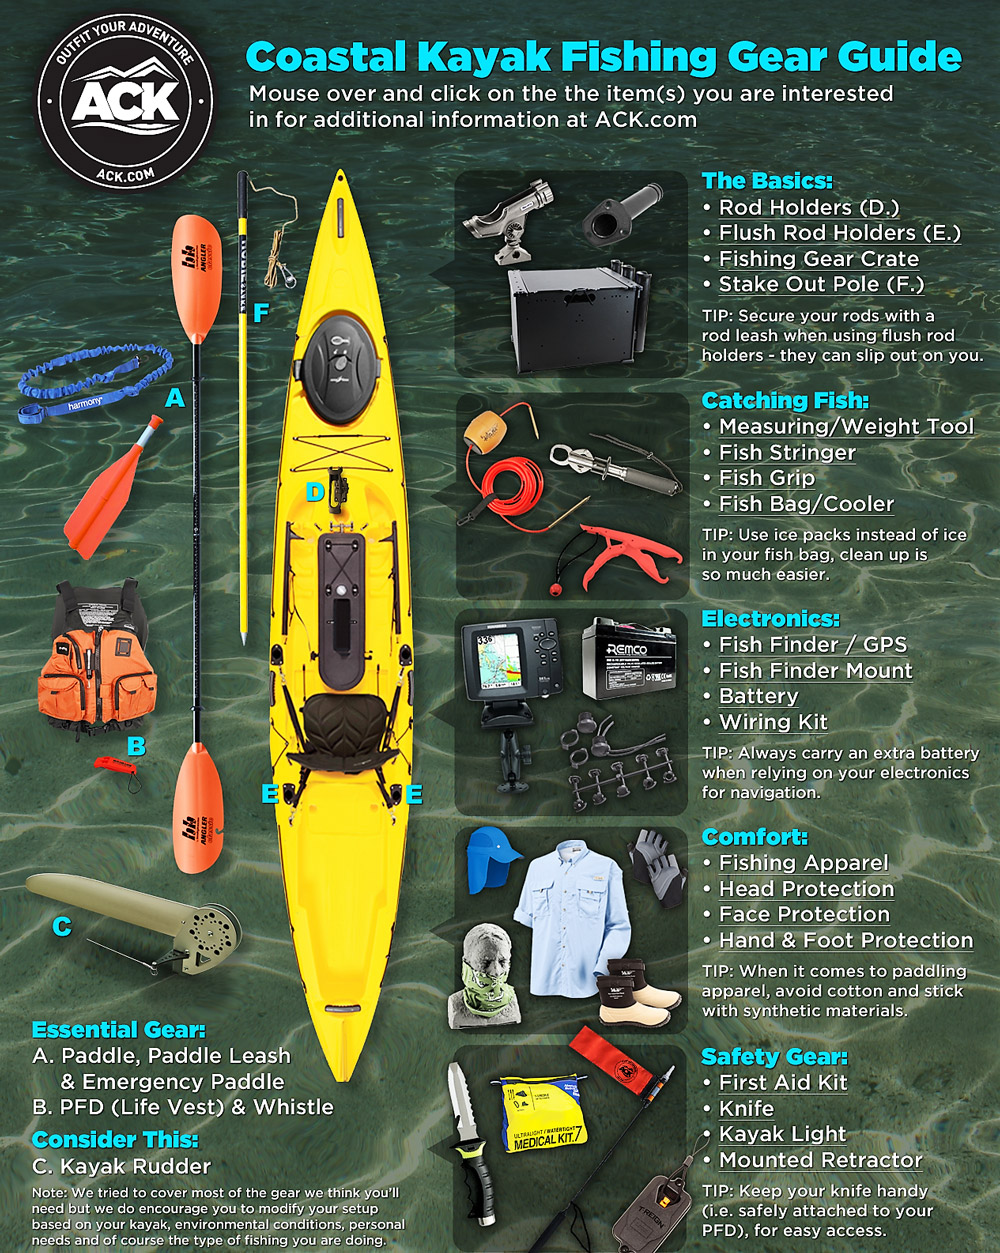 Necessary equipment for a fishing kayak